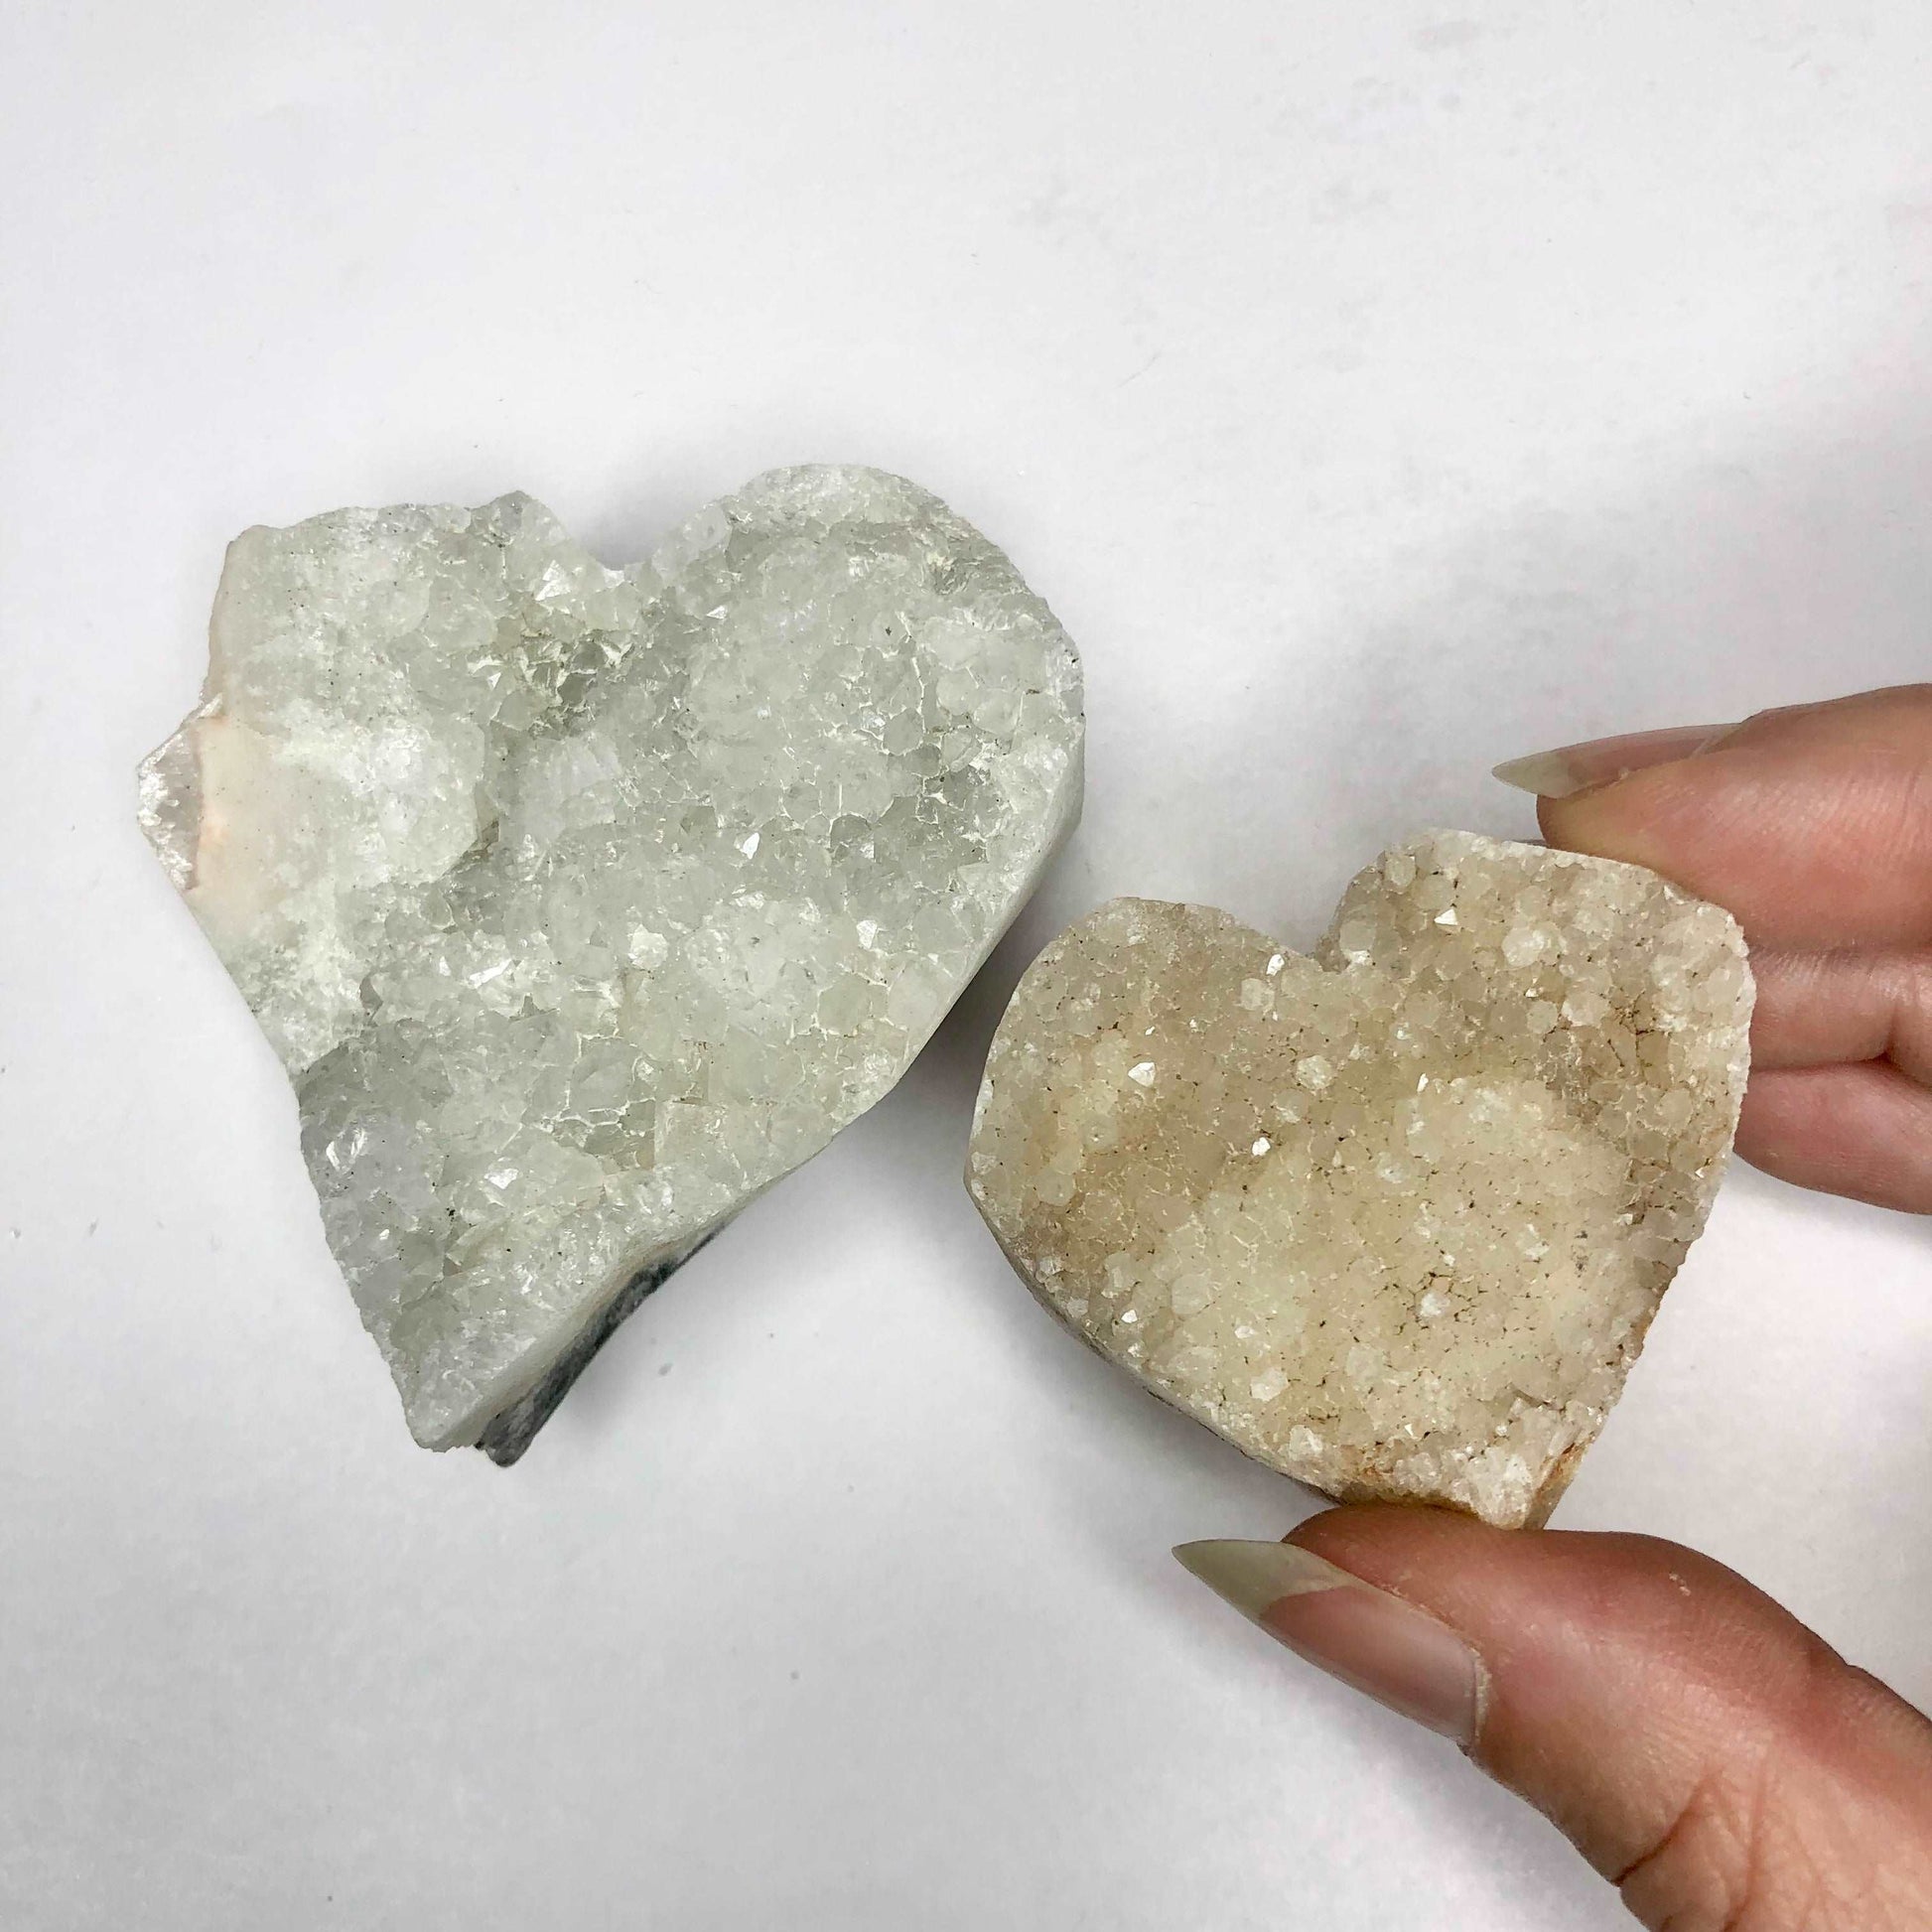 Apophyllite / stilbite heart shaped crystal cluster